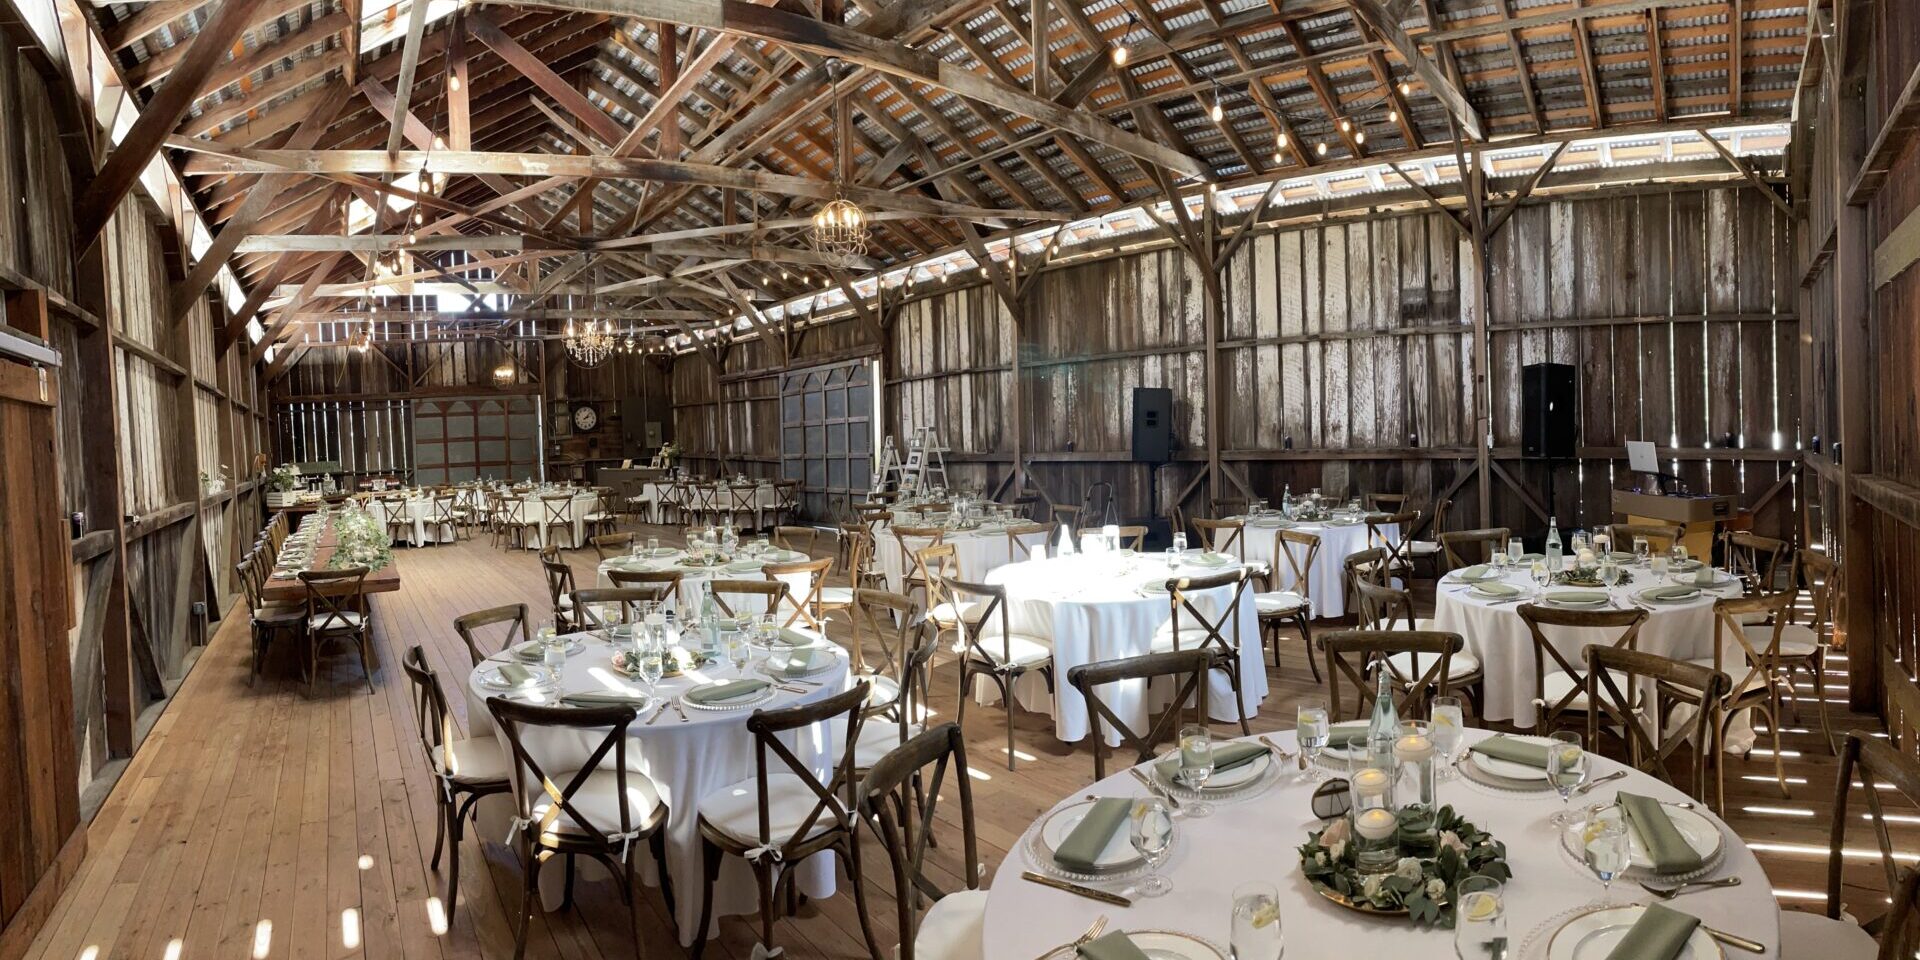 Planning a Barn Wedding in the Carmel, Monterey area